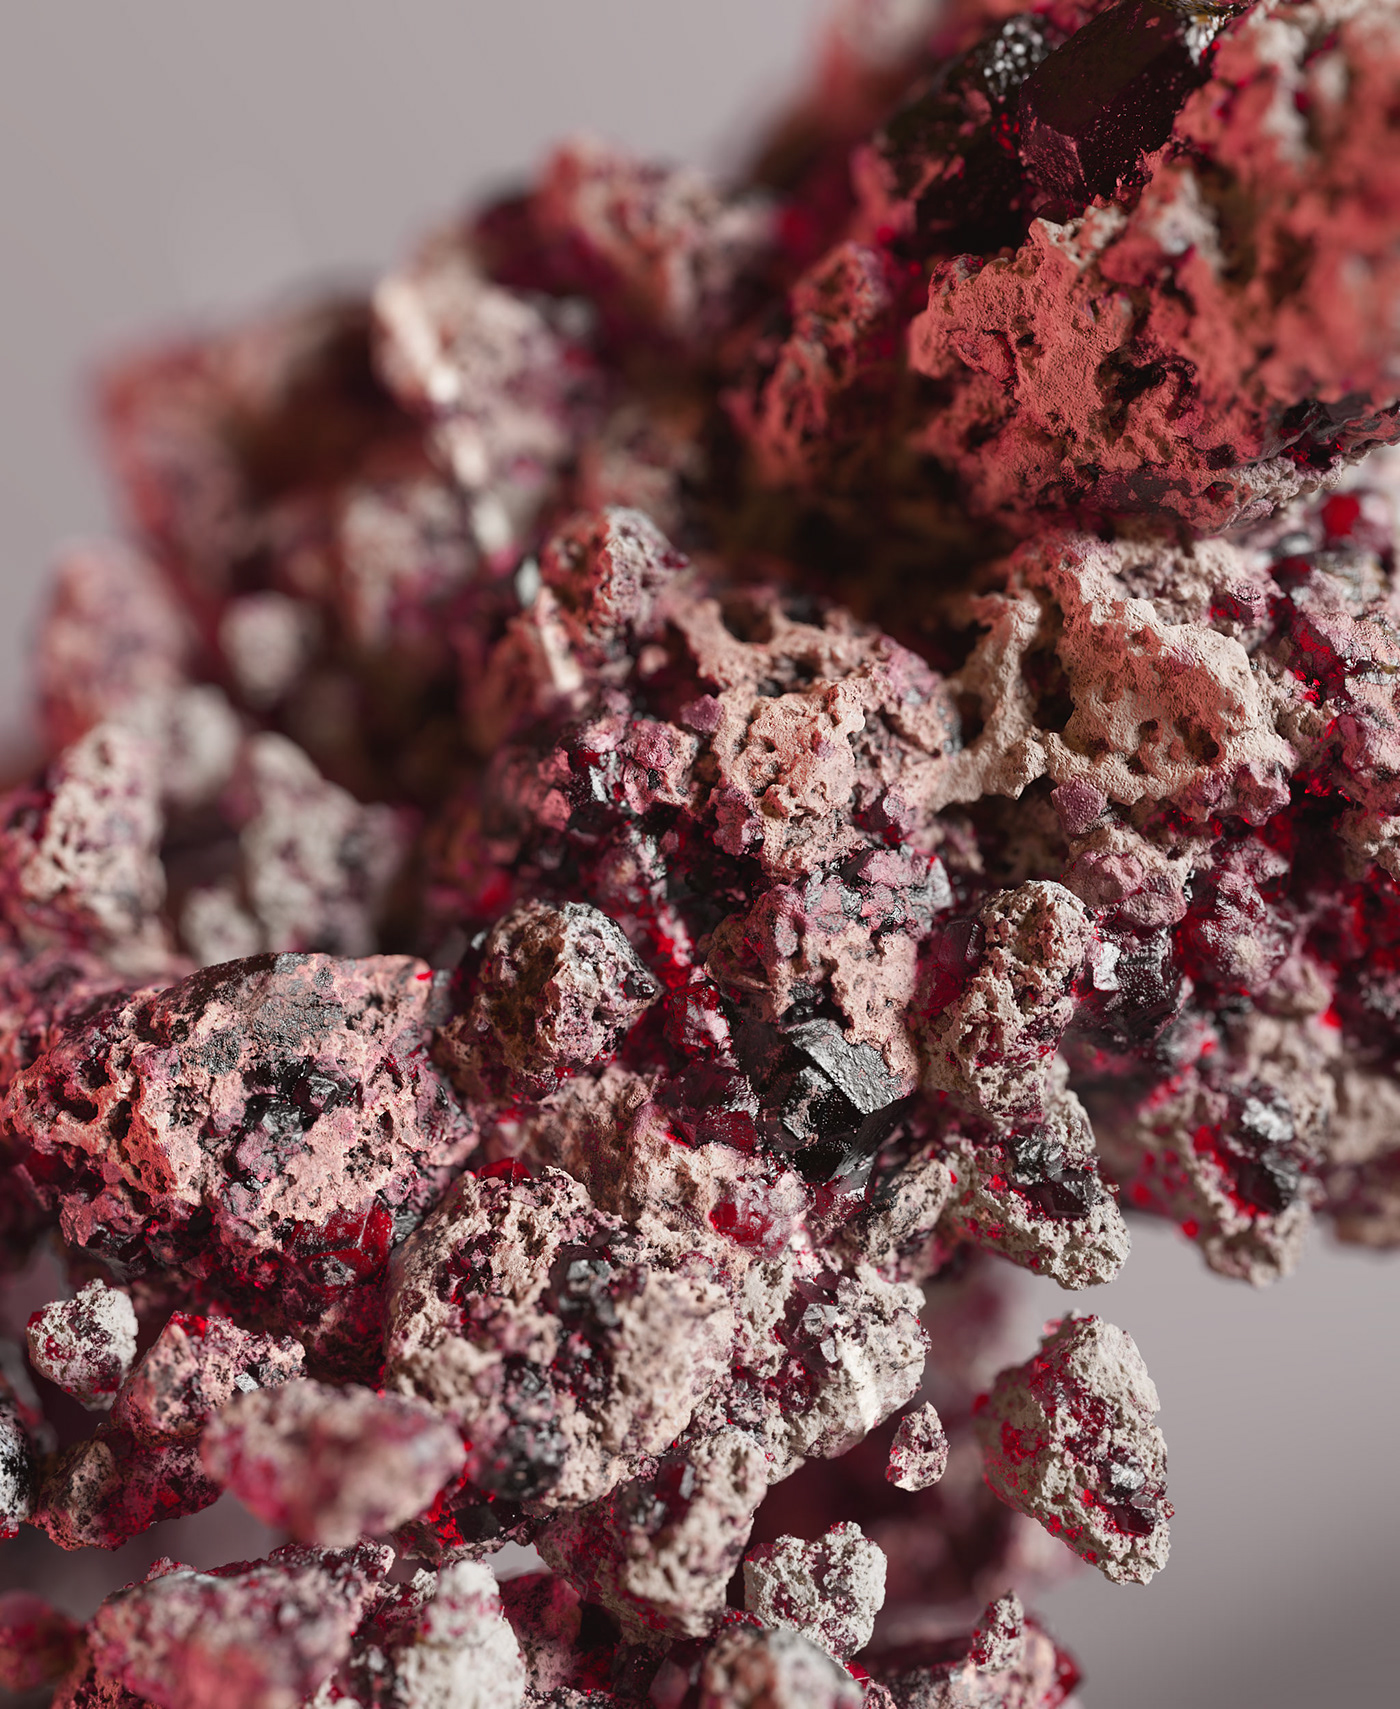 #art #cgi #creative direction #Digital art #mineral #Minerals #quality #Sleek